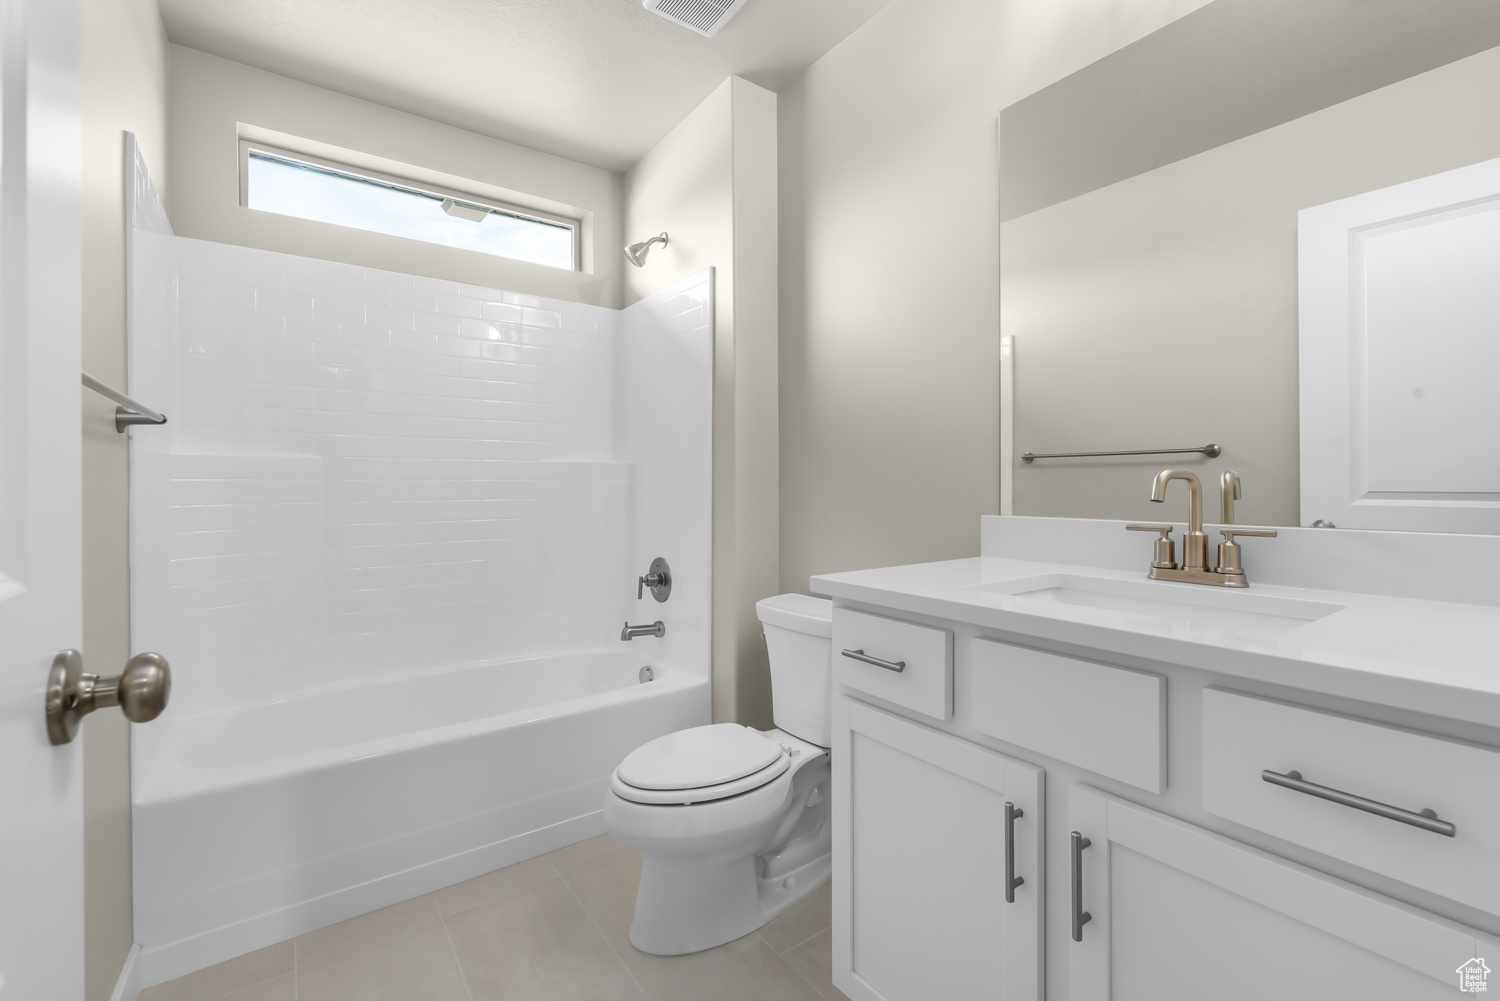 Full bathroom with tile floors, shower / bathing tub combination, toilet, and vanity